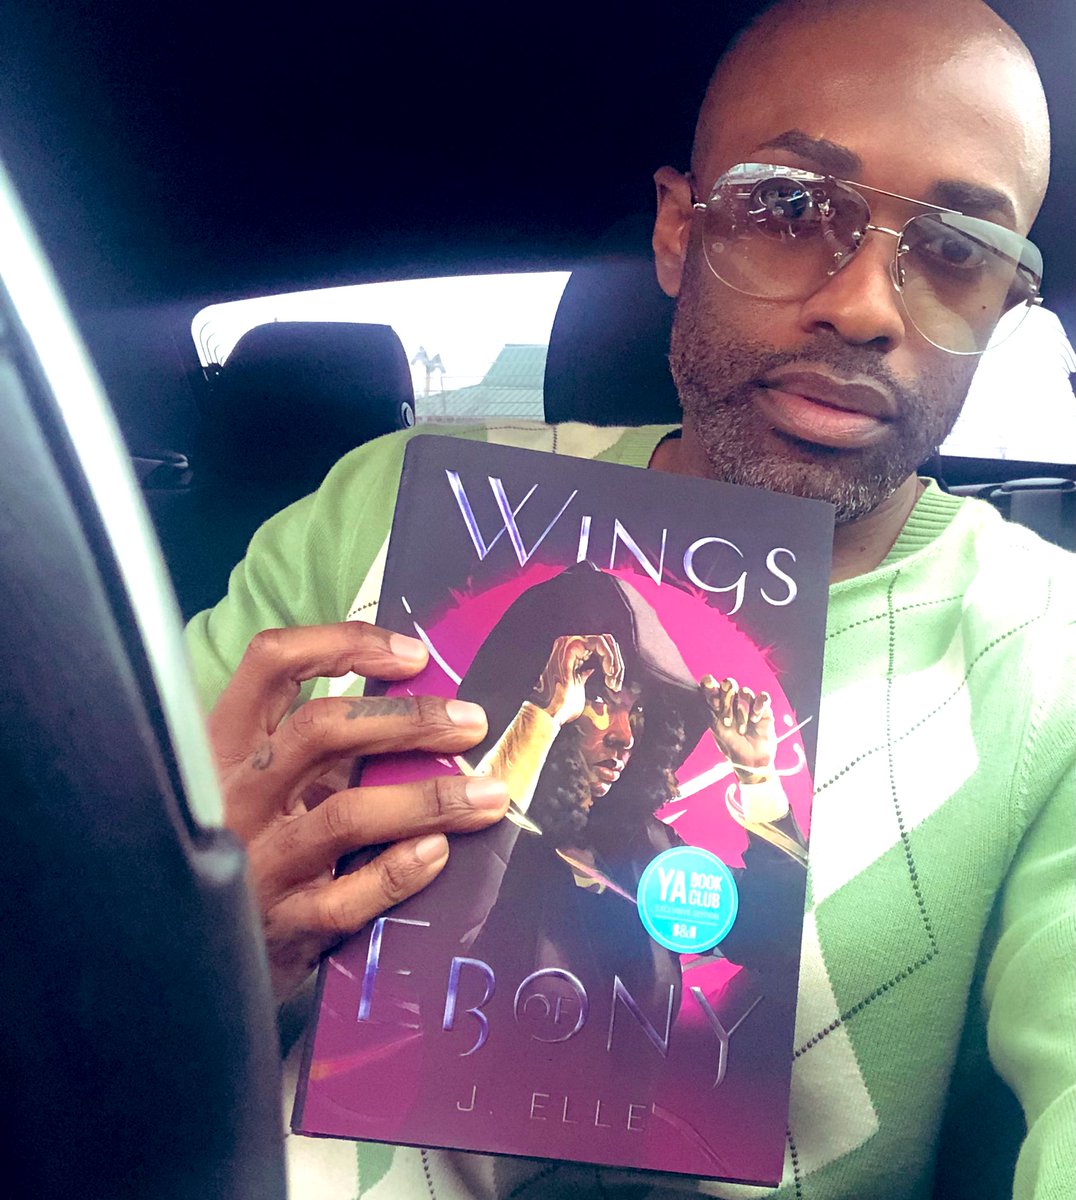 Got my copy! Where’s yours?
#WingsOfEbony